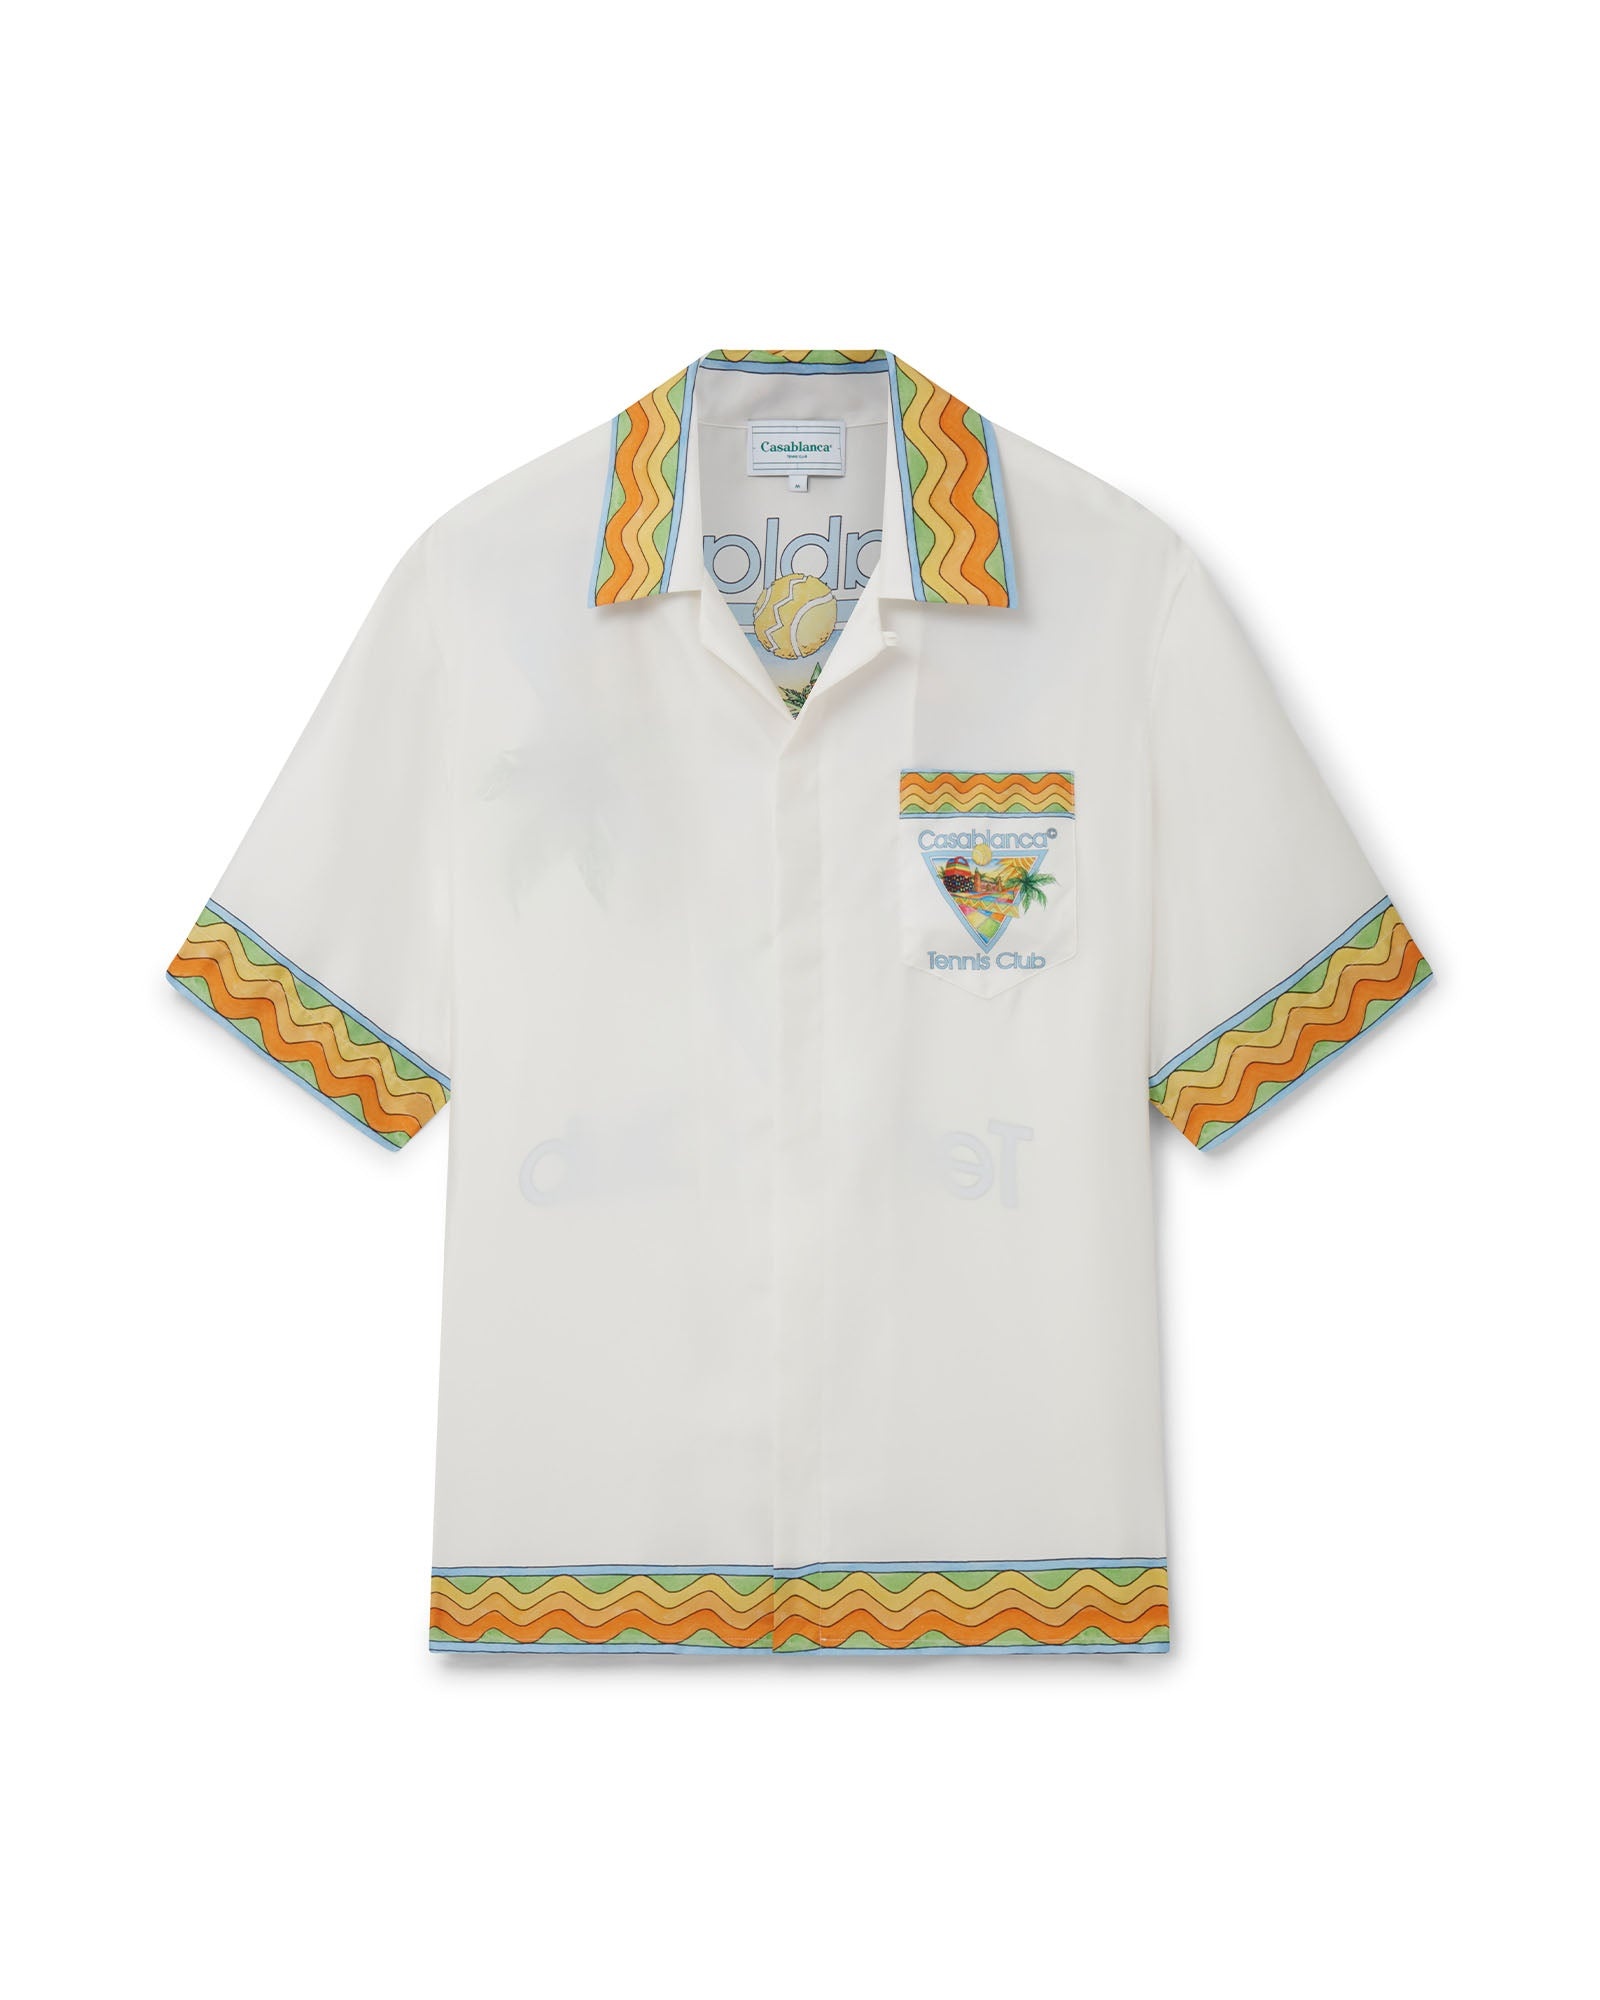 Afro Cubism Tennis Club Silk Shirt - 1